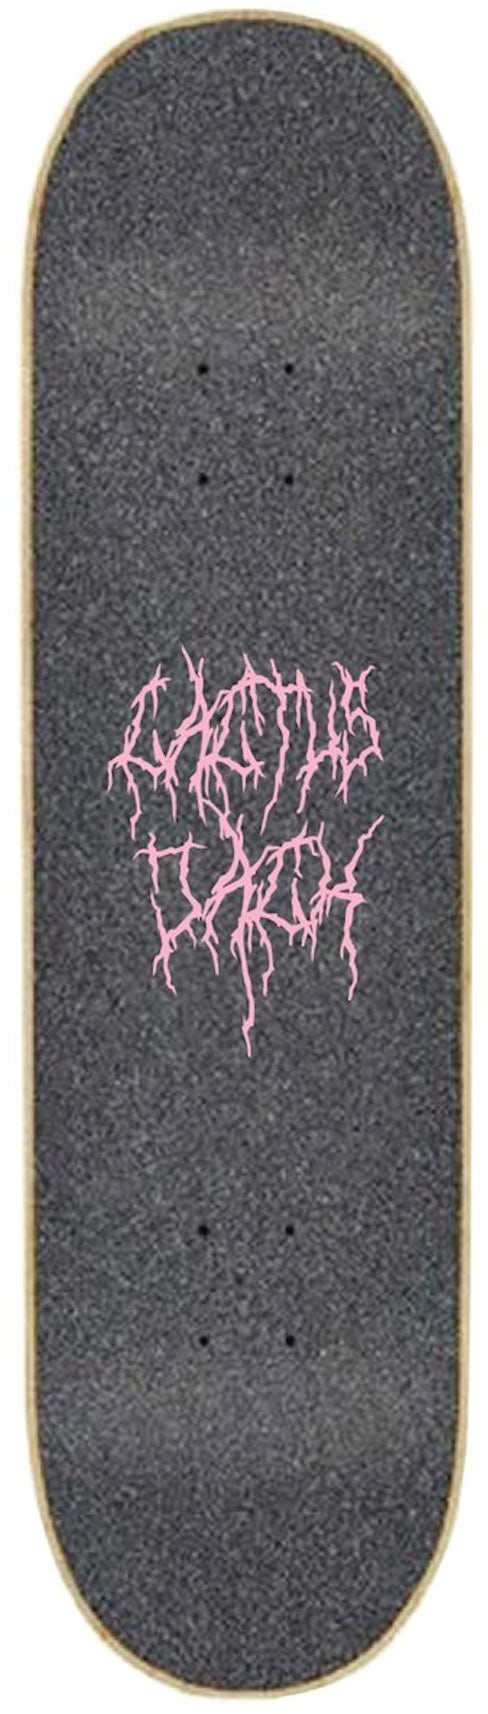 Travis Scott Cactus Jack Skate Grip Tape - US